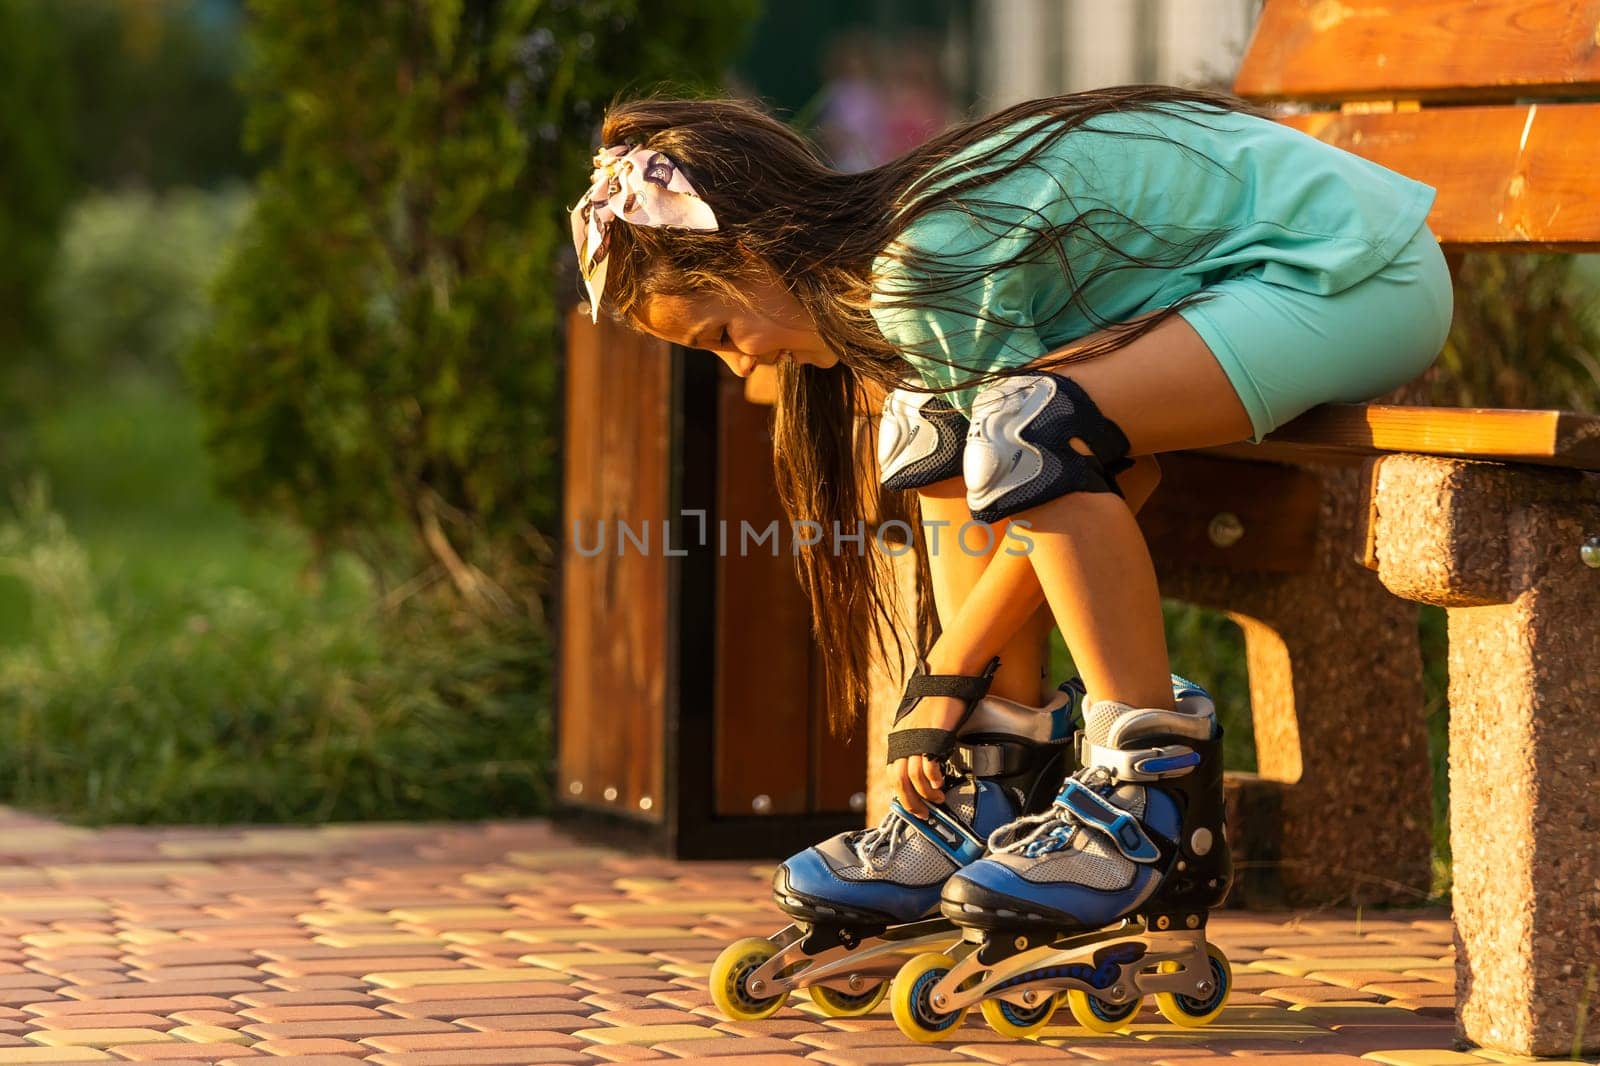 Little girl in roller skates at a park